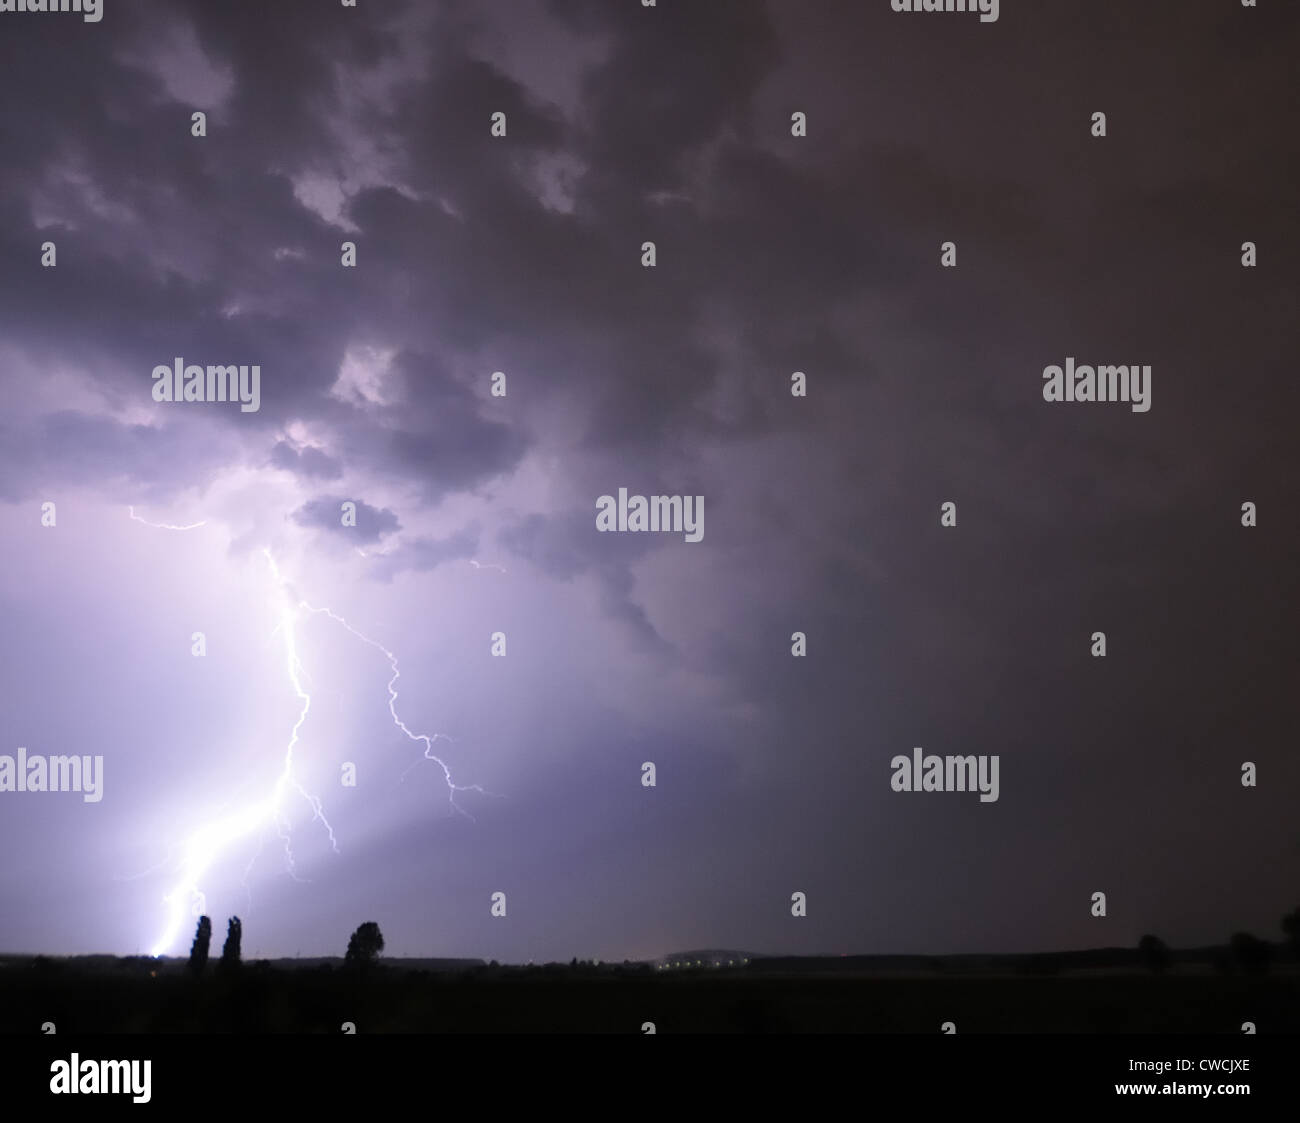 Lightning strikes at the horizon near two trees. Stock Photo